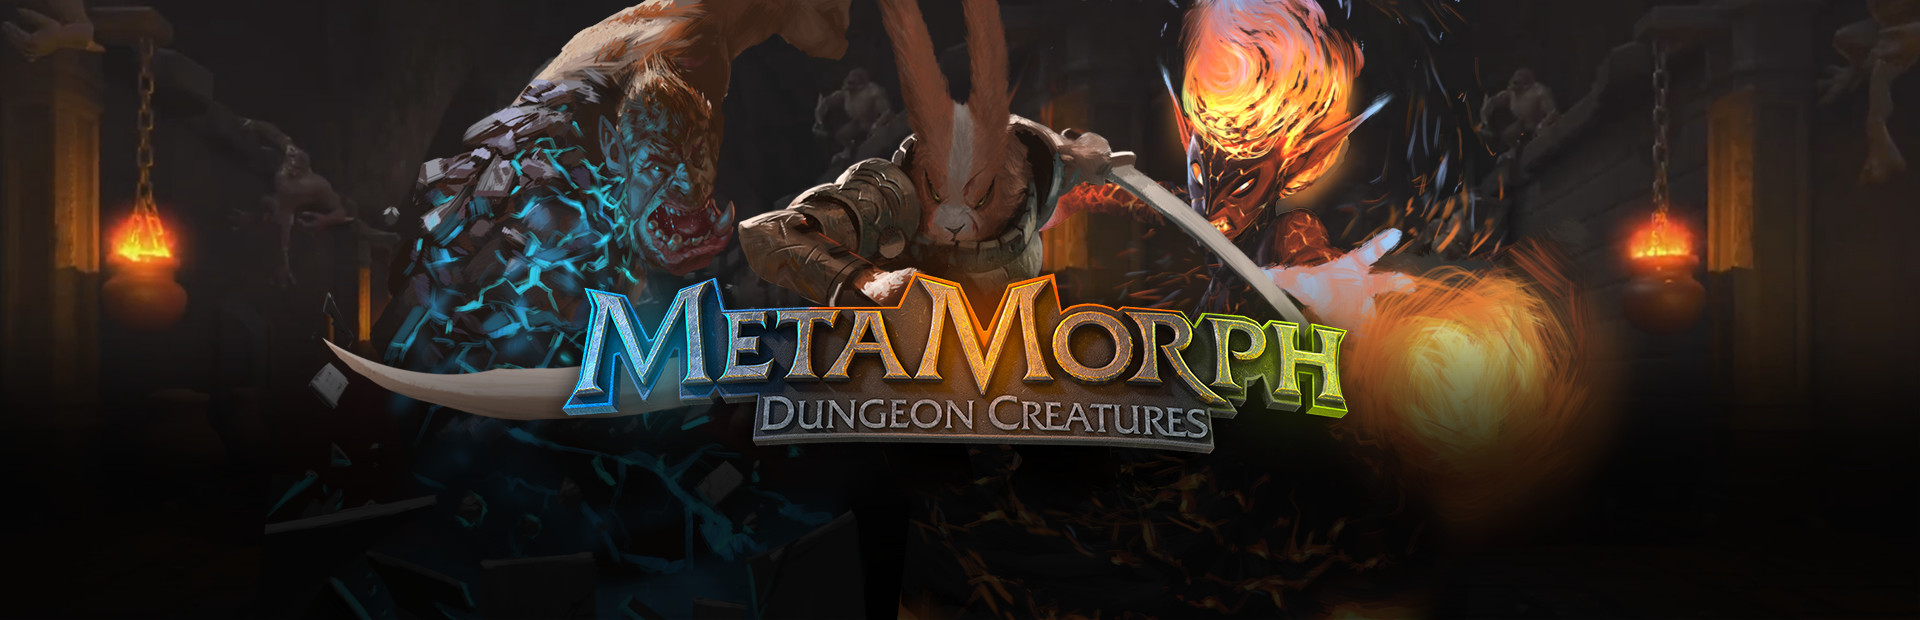 MetaMorph: Dungeon Creatures cover image